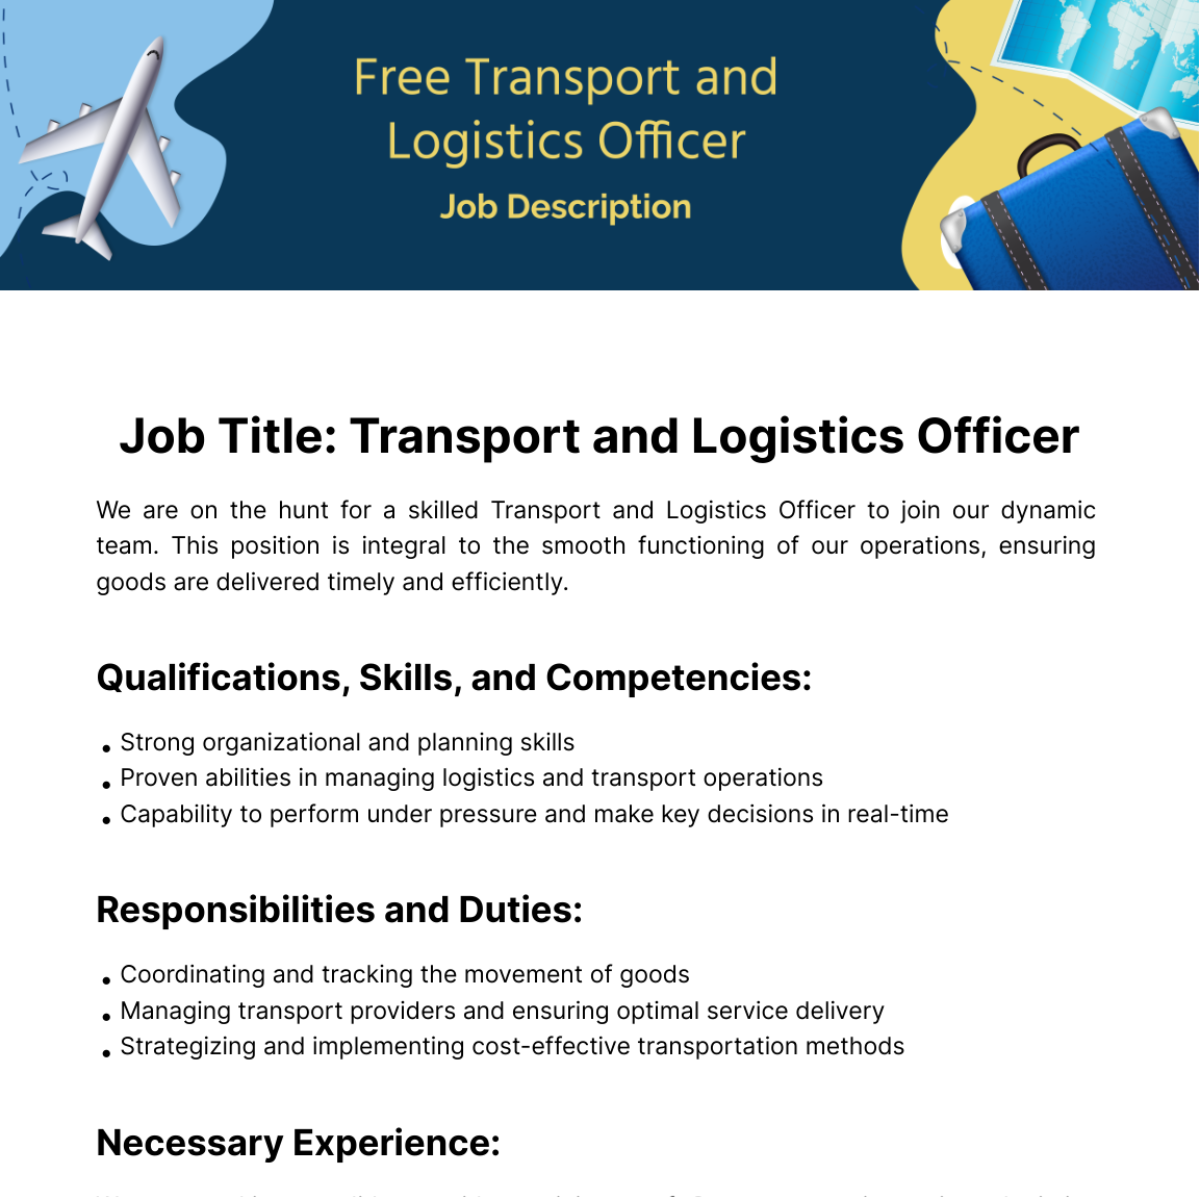 Transport and Logistics Officer Job Description Template